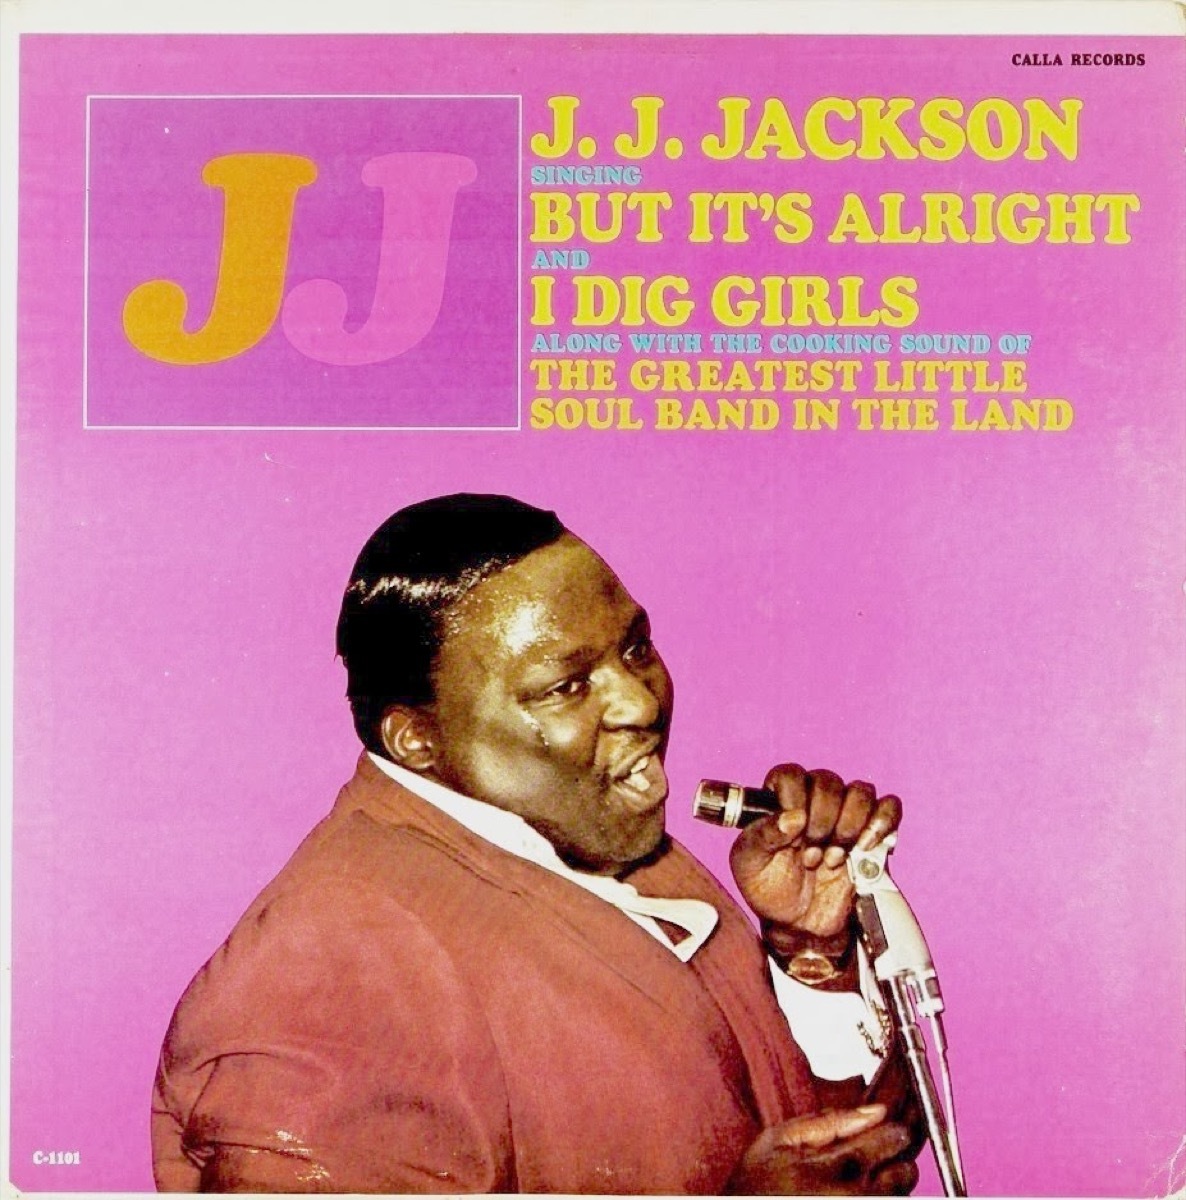 But It's Alright by J.J. Jackson